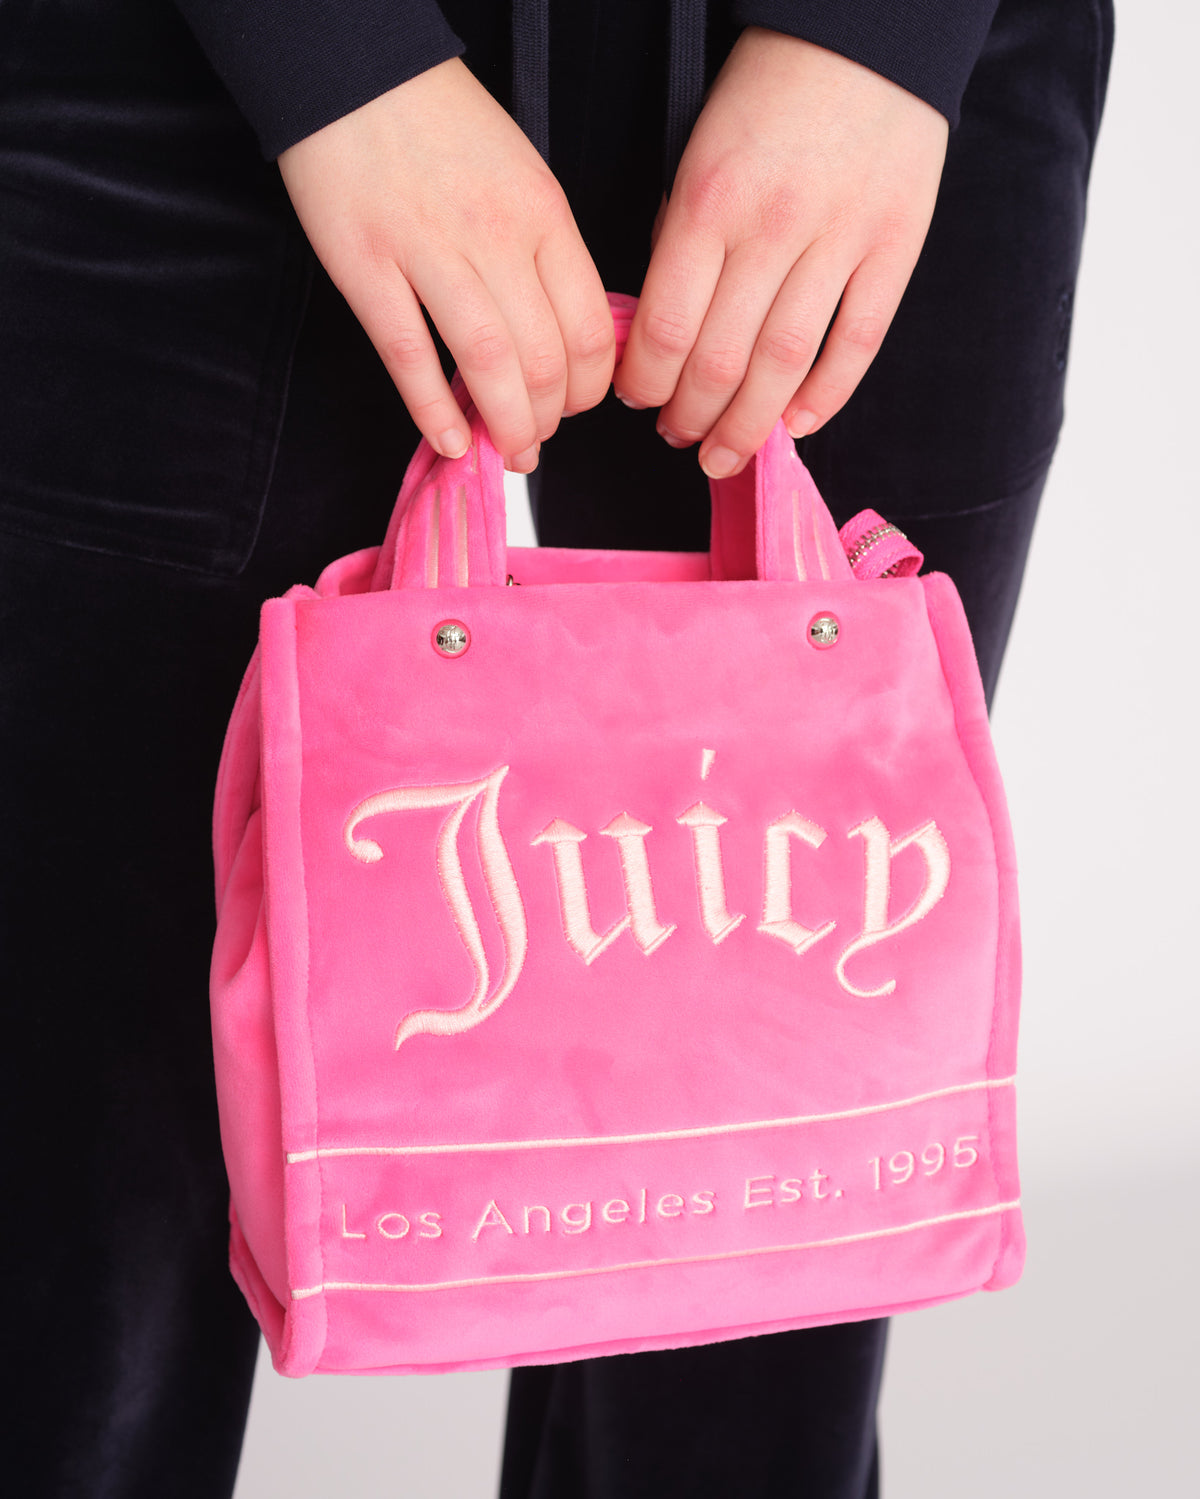 Iris Small Shopper Bag Fuxia/LT Pink - Juicy Couture Scandinavia